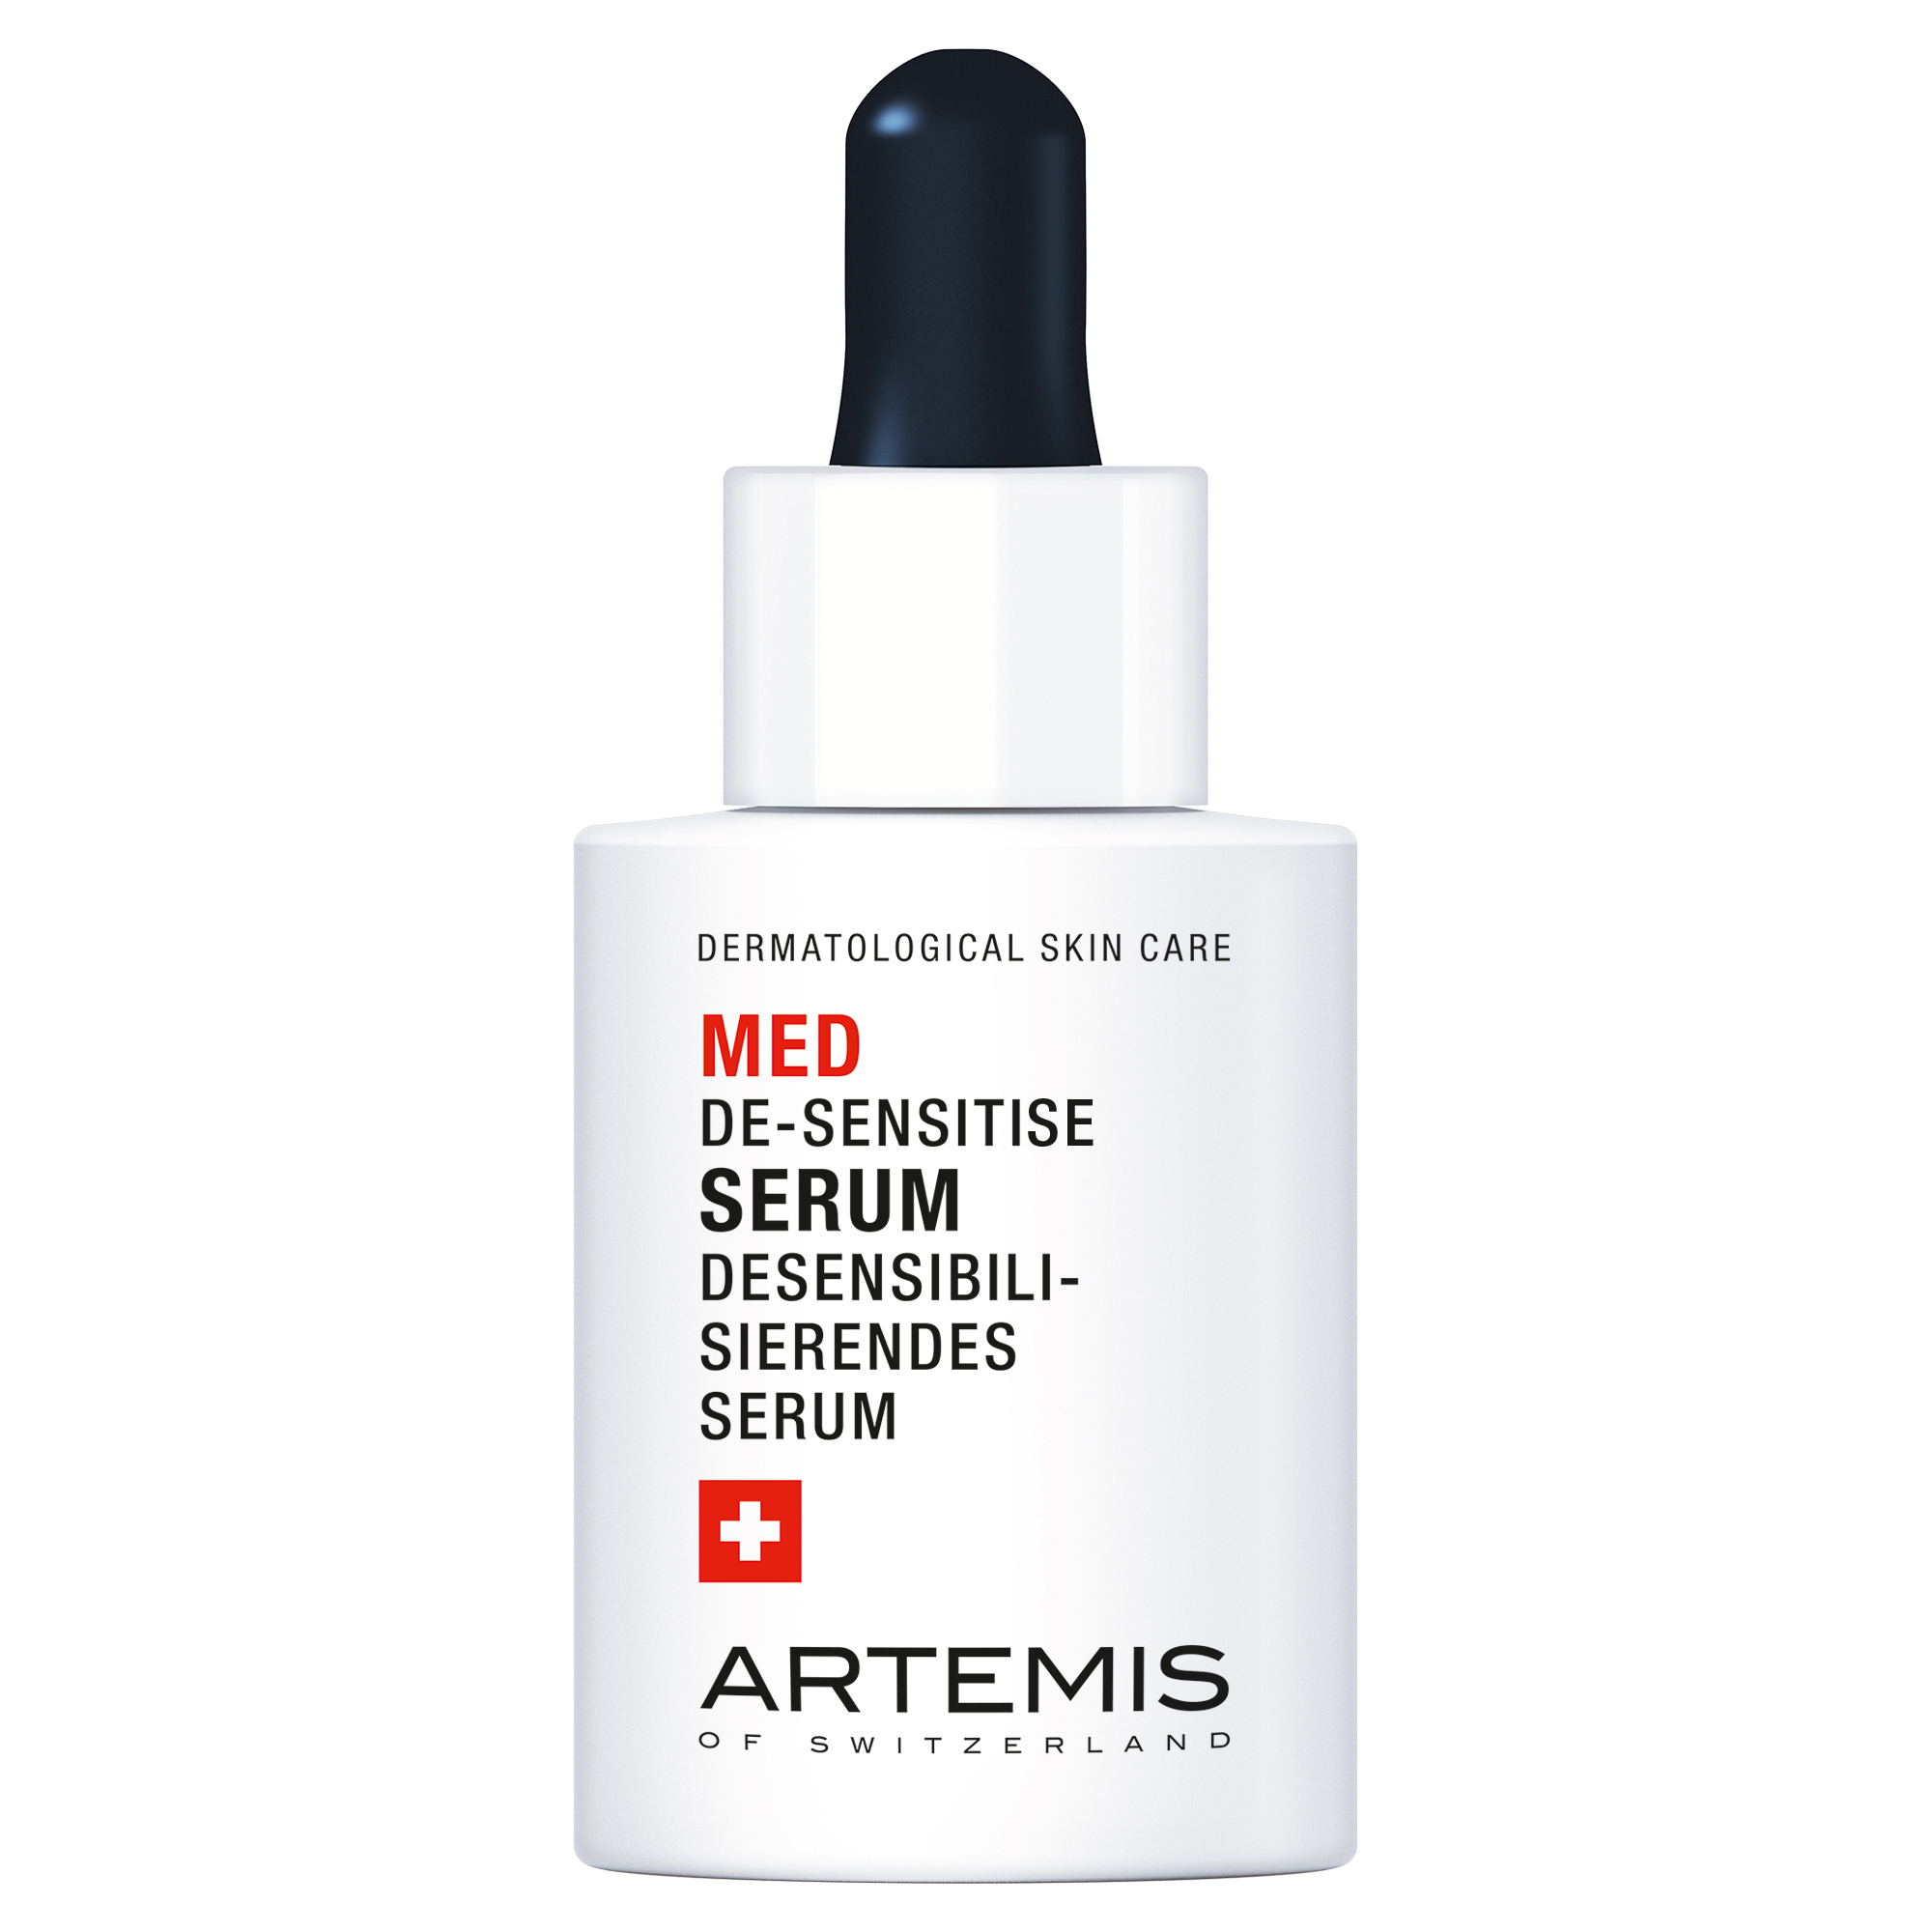 Artemis MED De-Sensitize Serum 30ml